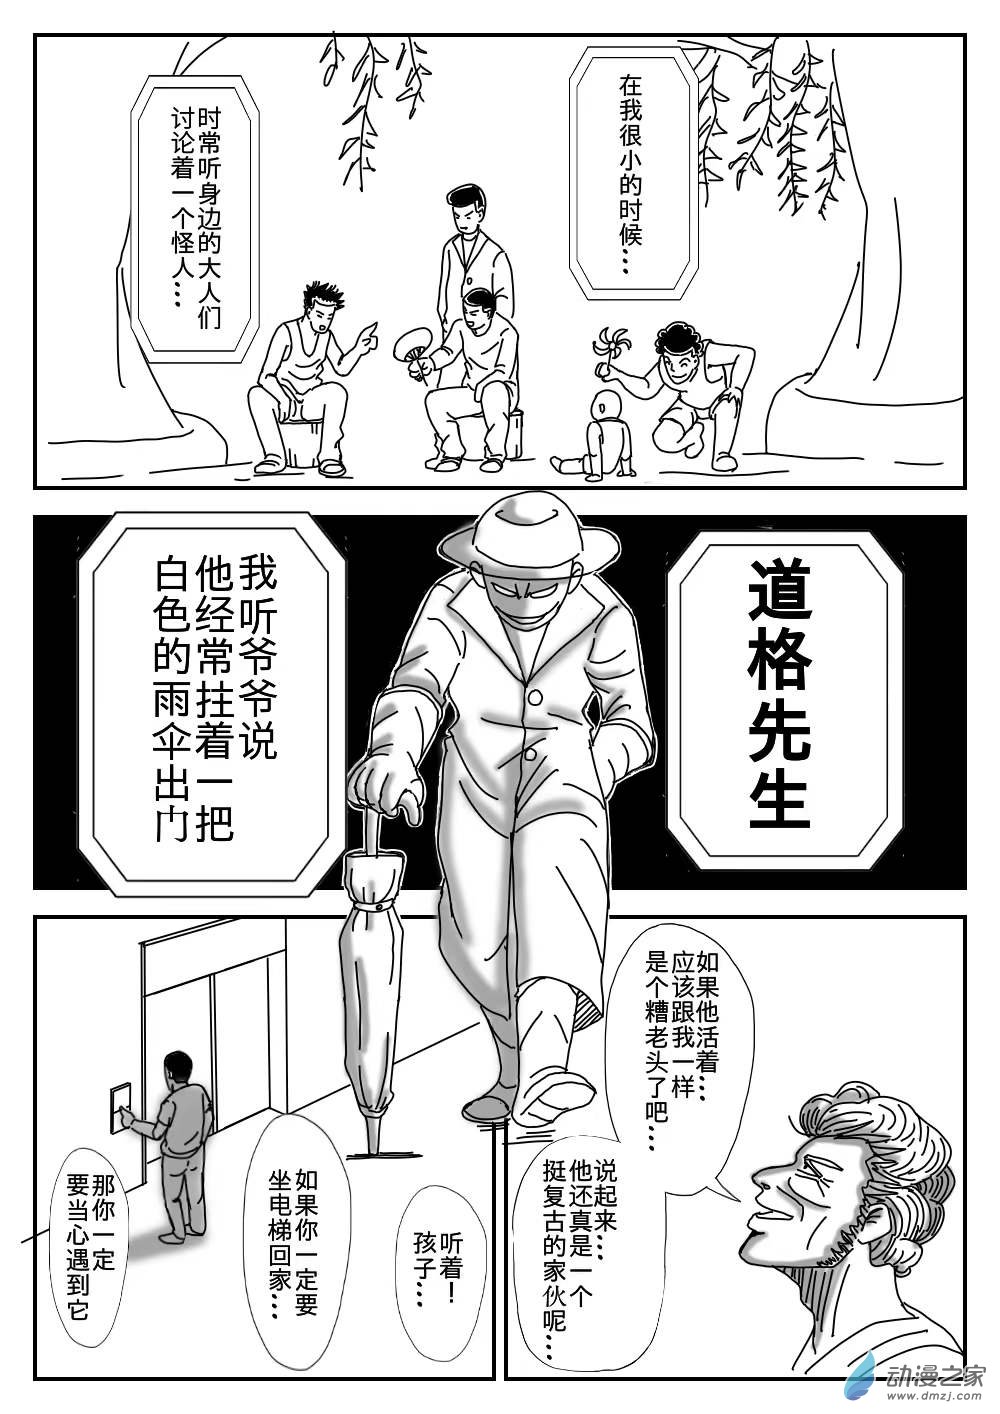 K神的短篇漫畫集 - 02 道格先生 - 4